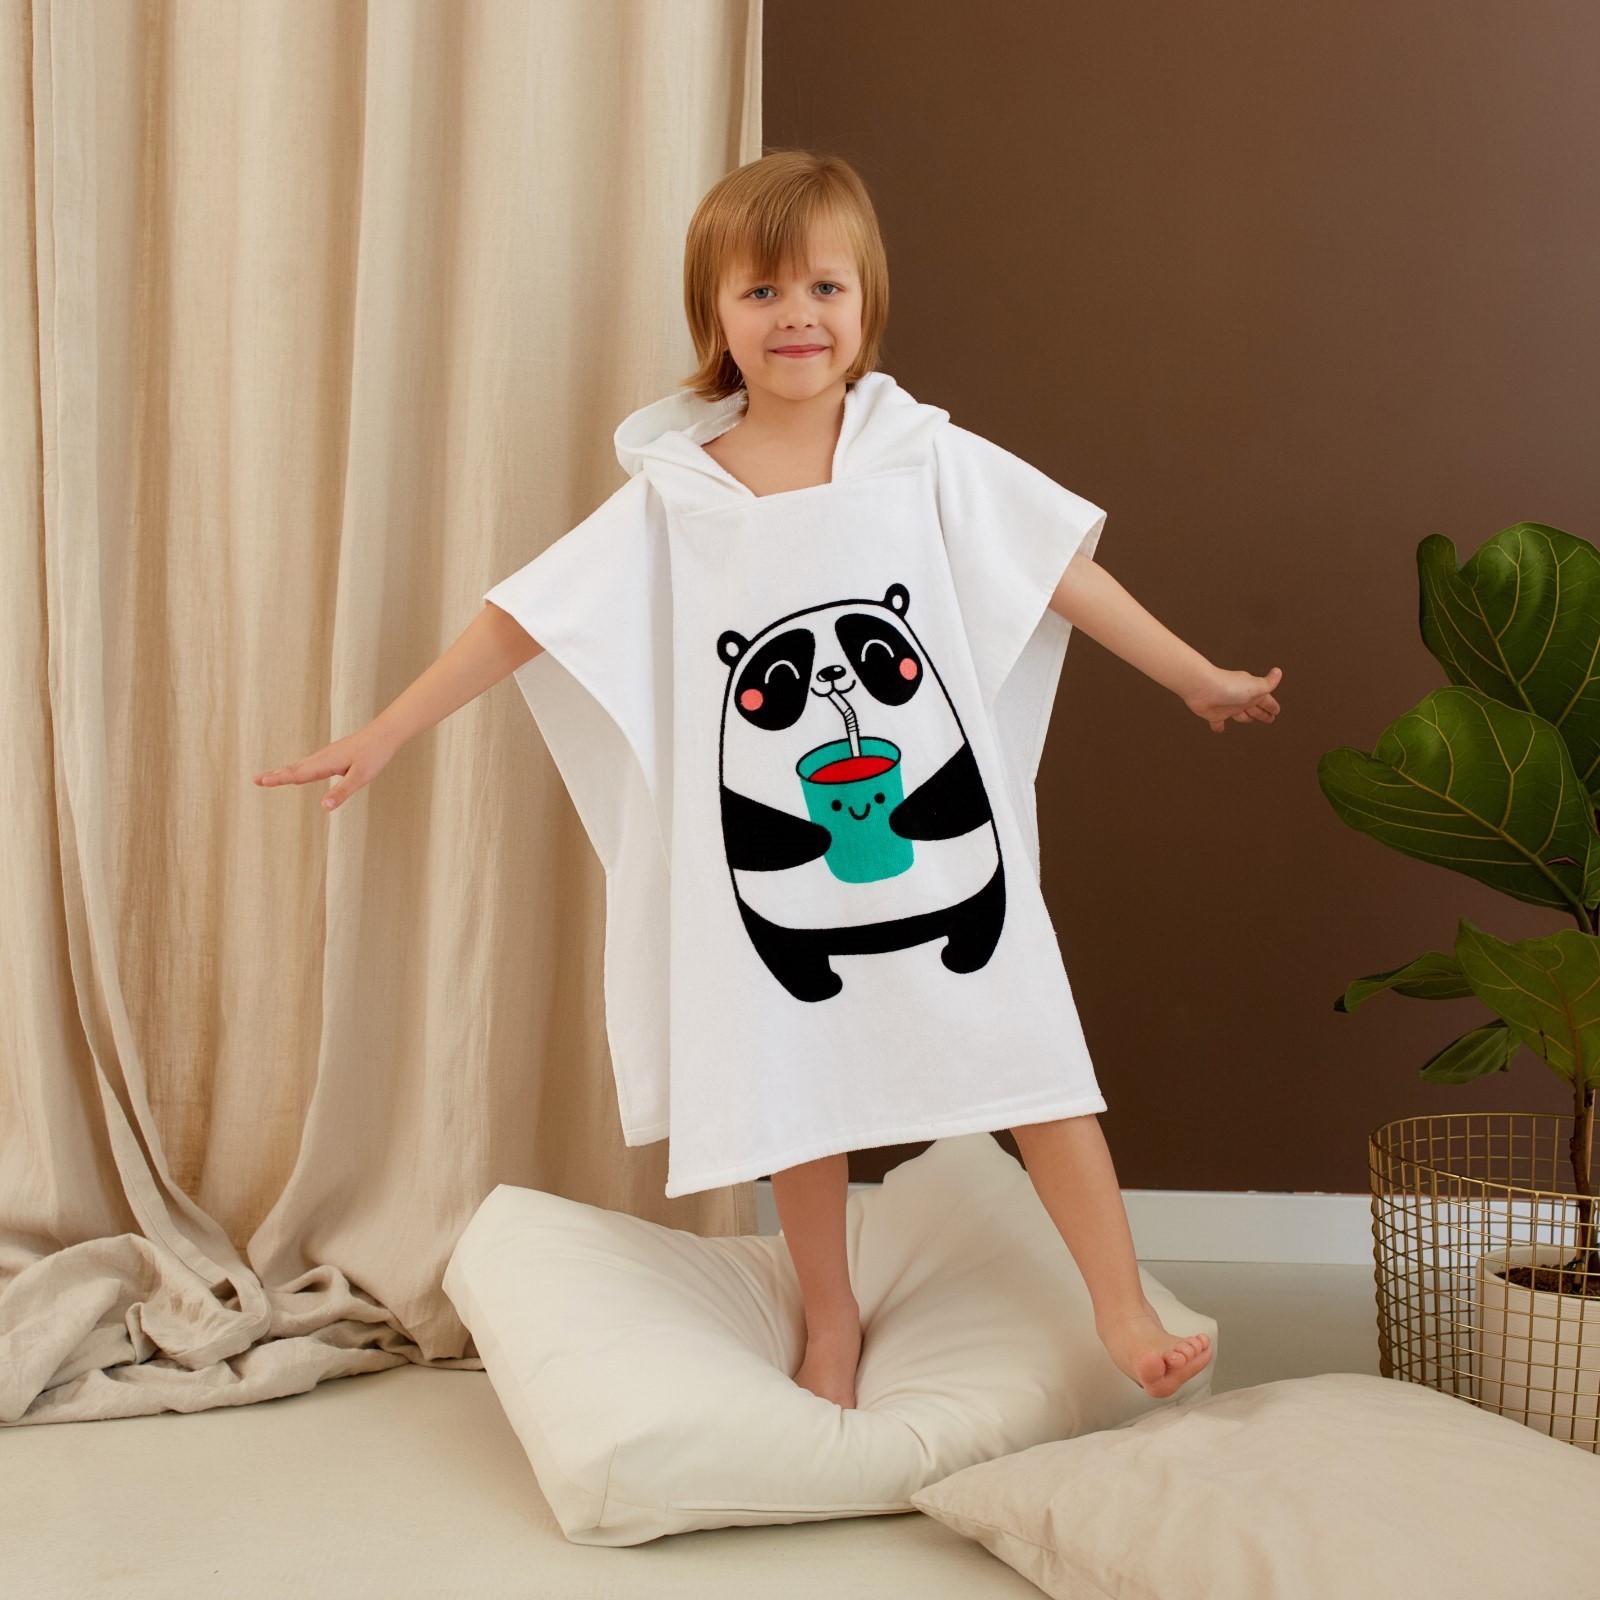 Детское полотенце Панда цвет: белый (60х120 см), размер 60х120 см ros910586 Детское полотенце Панда цвет: белый (60х120 см) - фото 1